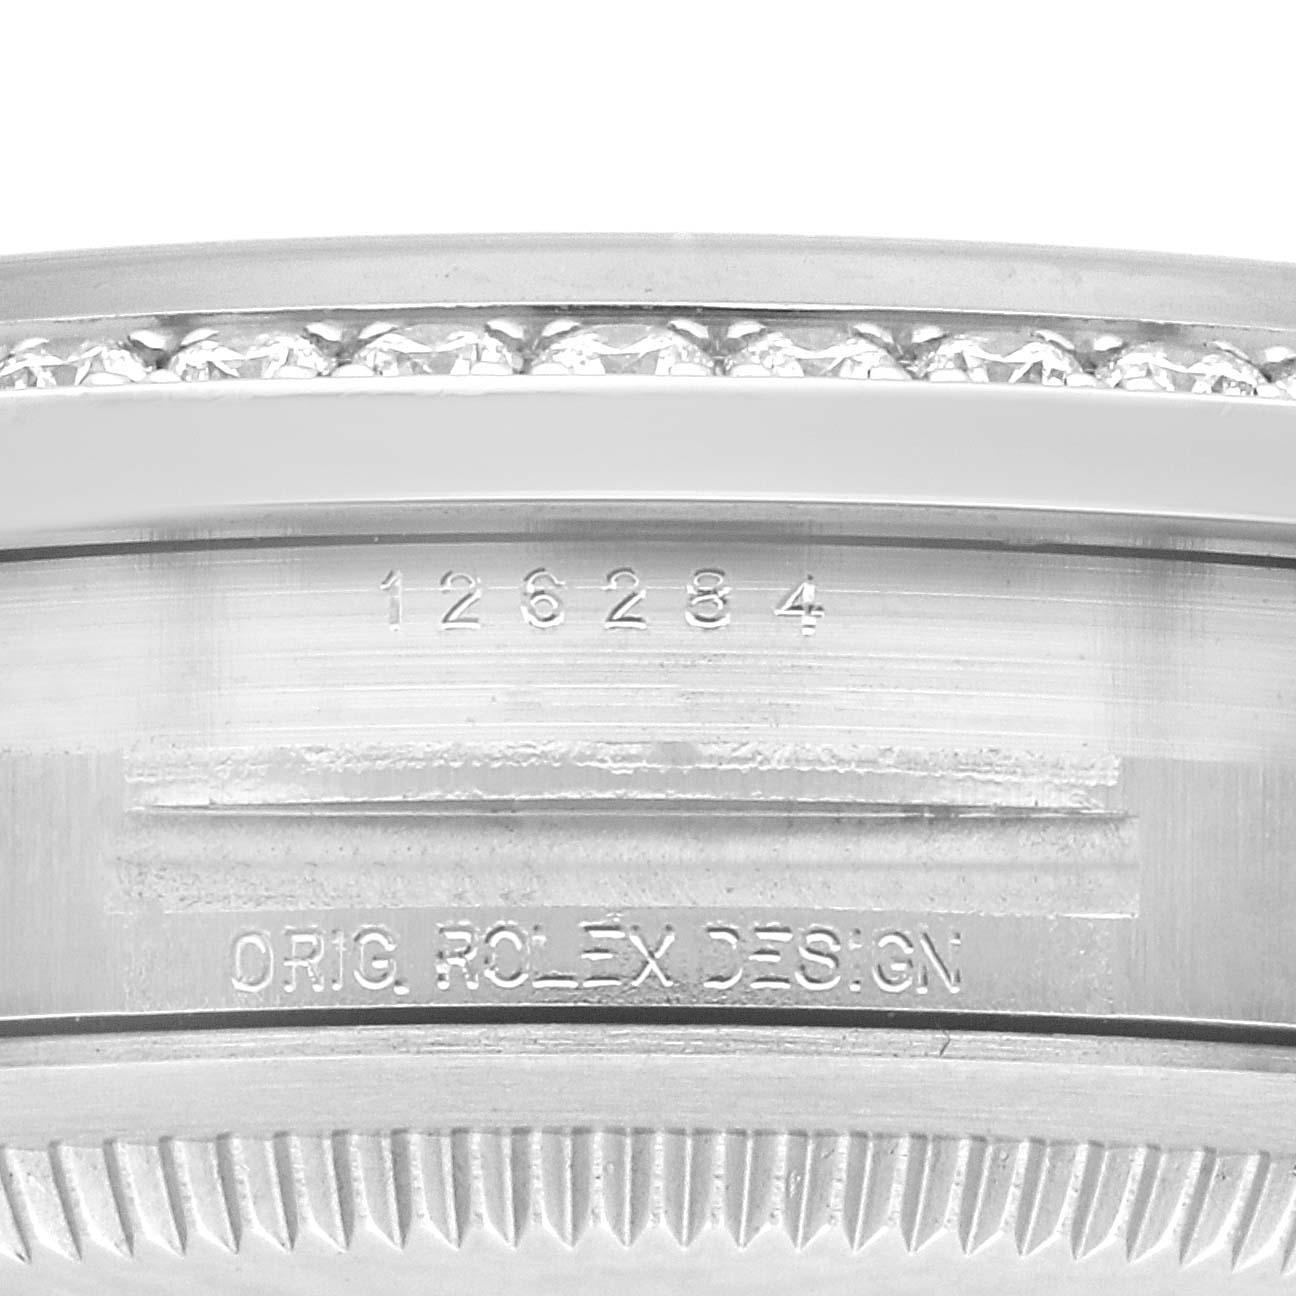 Rolex Datejust Steel Purple Diamond Dial Bezel Mens Watch 126284. Officially certified chronometer self-winding movement. Stainless steel case 36.0 mm in diameter.  Rolex logo on a crown. Original Rolex factory diamond bezel. Scratch resistant